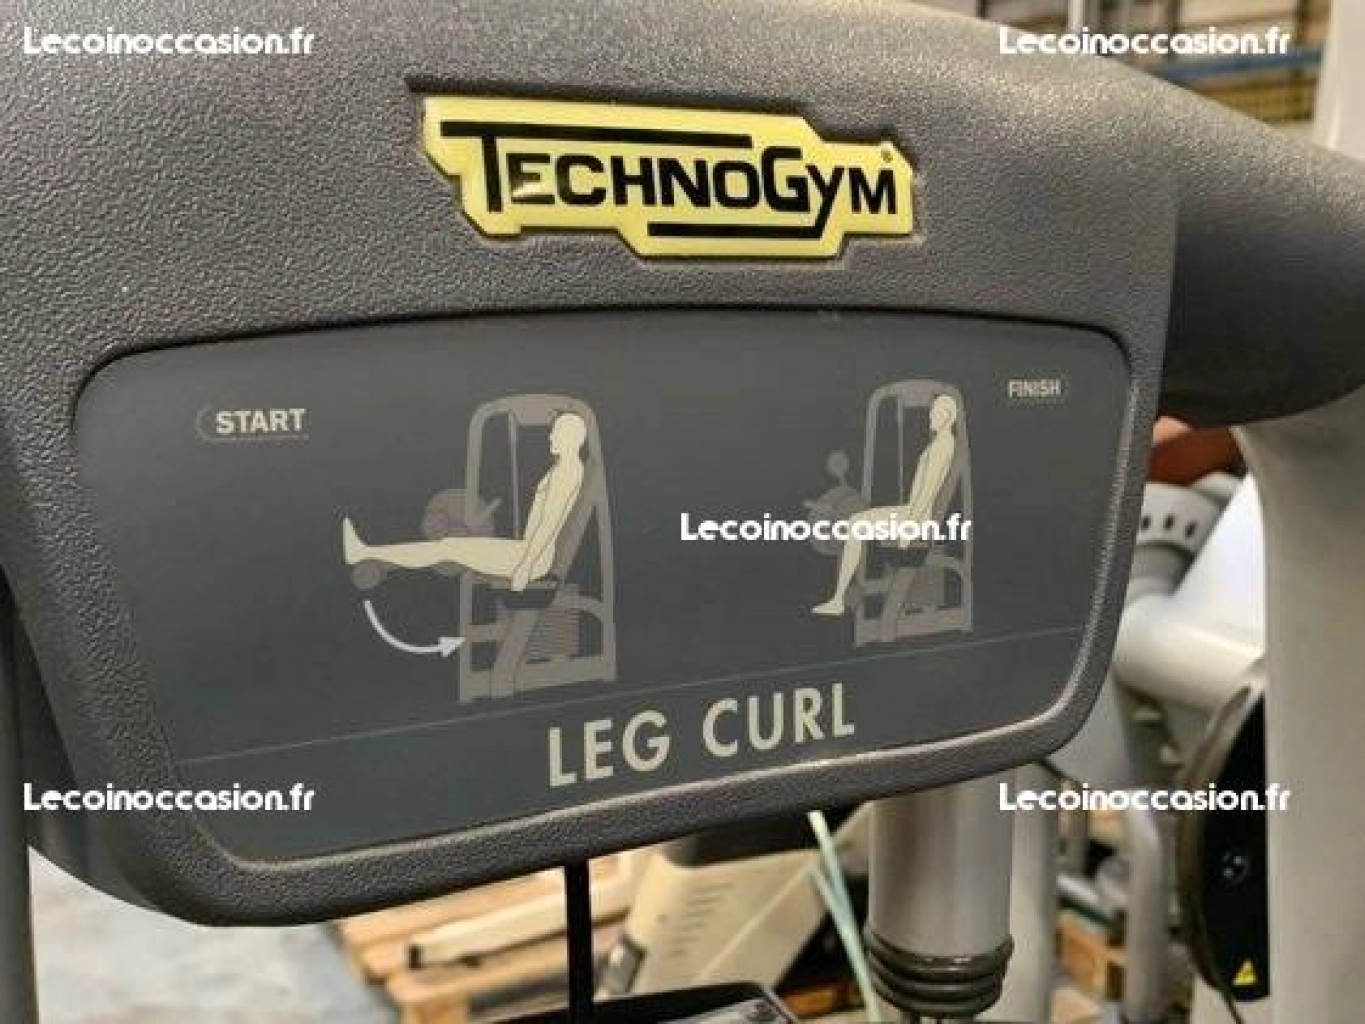 Musculation | Leg curl M990 Technogym Selection Occasion